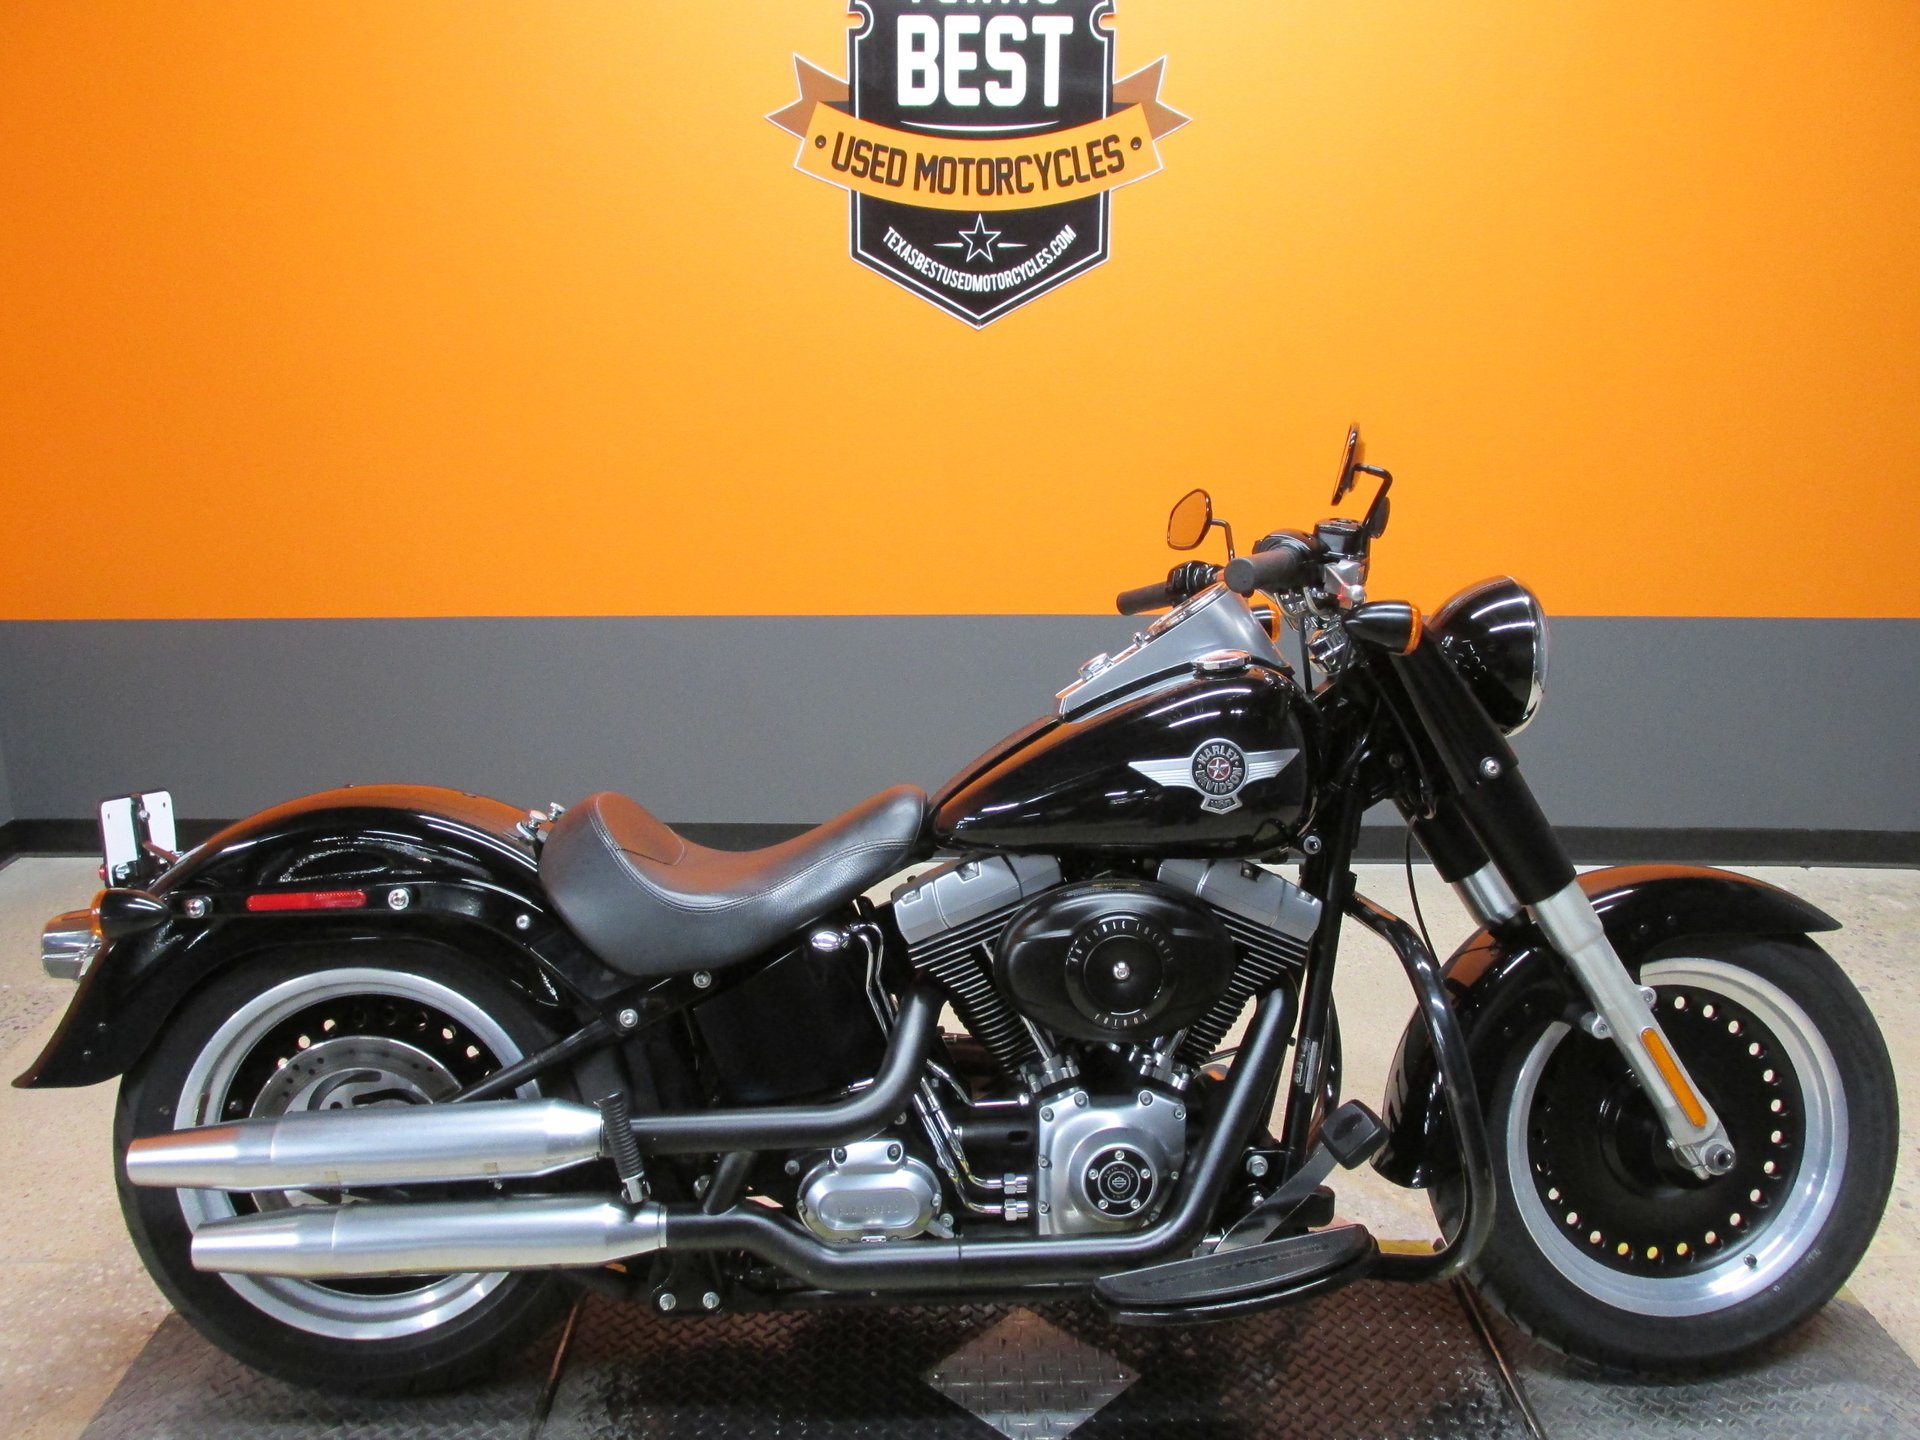 2010 Harley-Davidson Softail Fat Boy | American Motorcycle Trading Company  - Used Harley Davidson Motorcycles